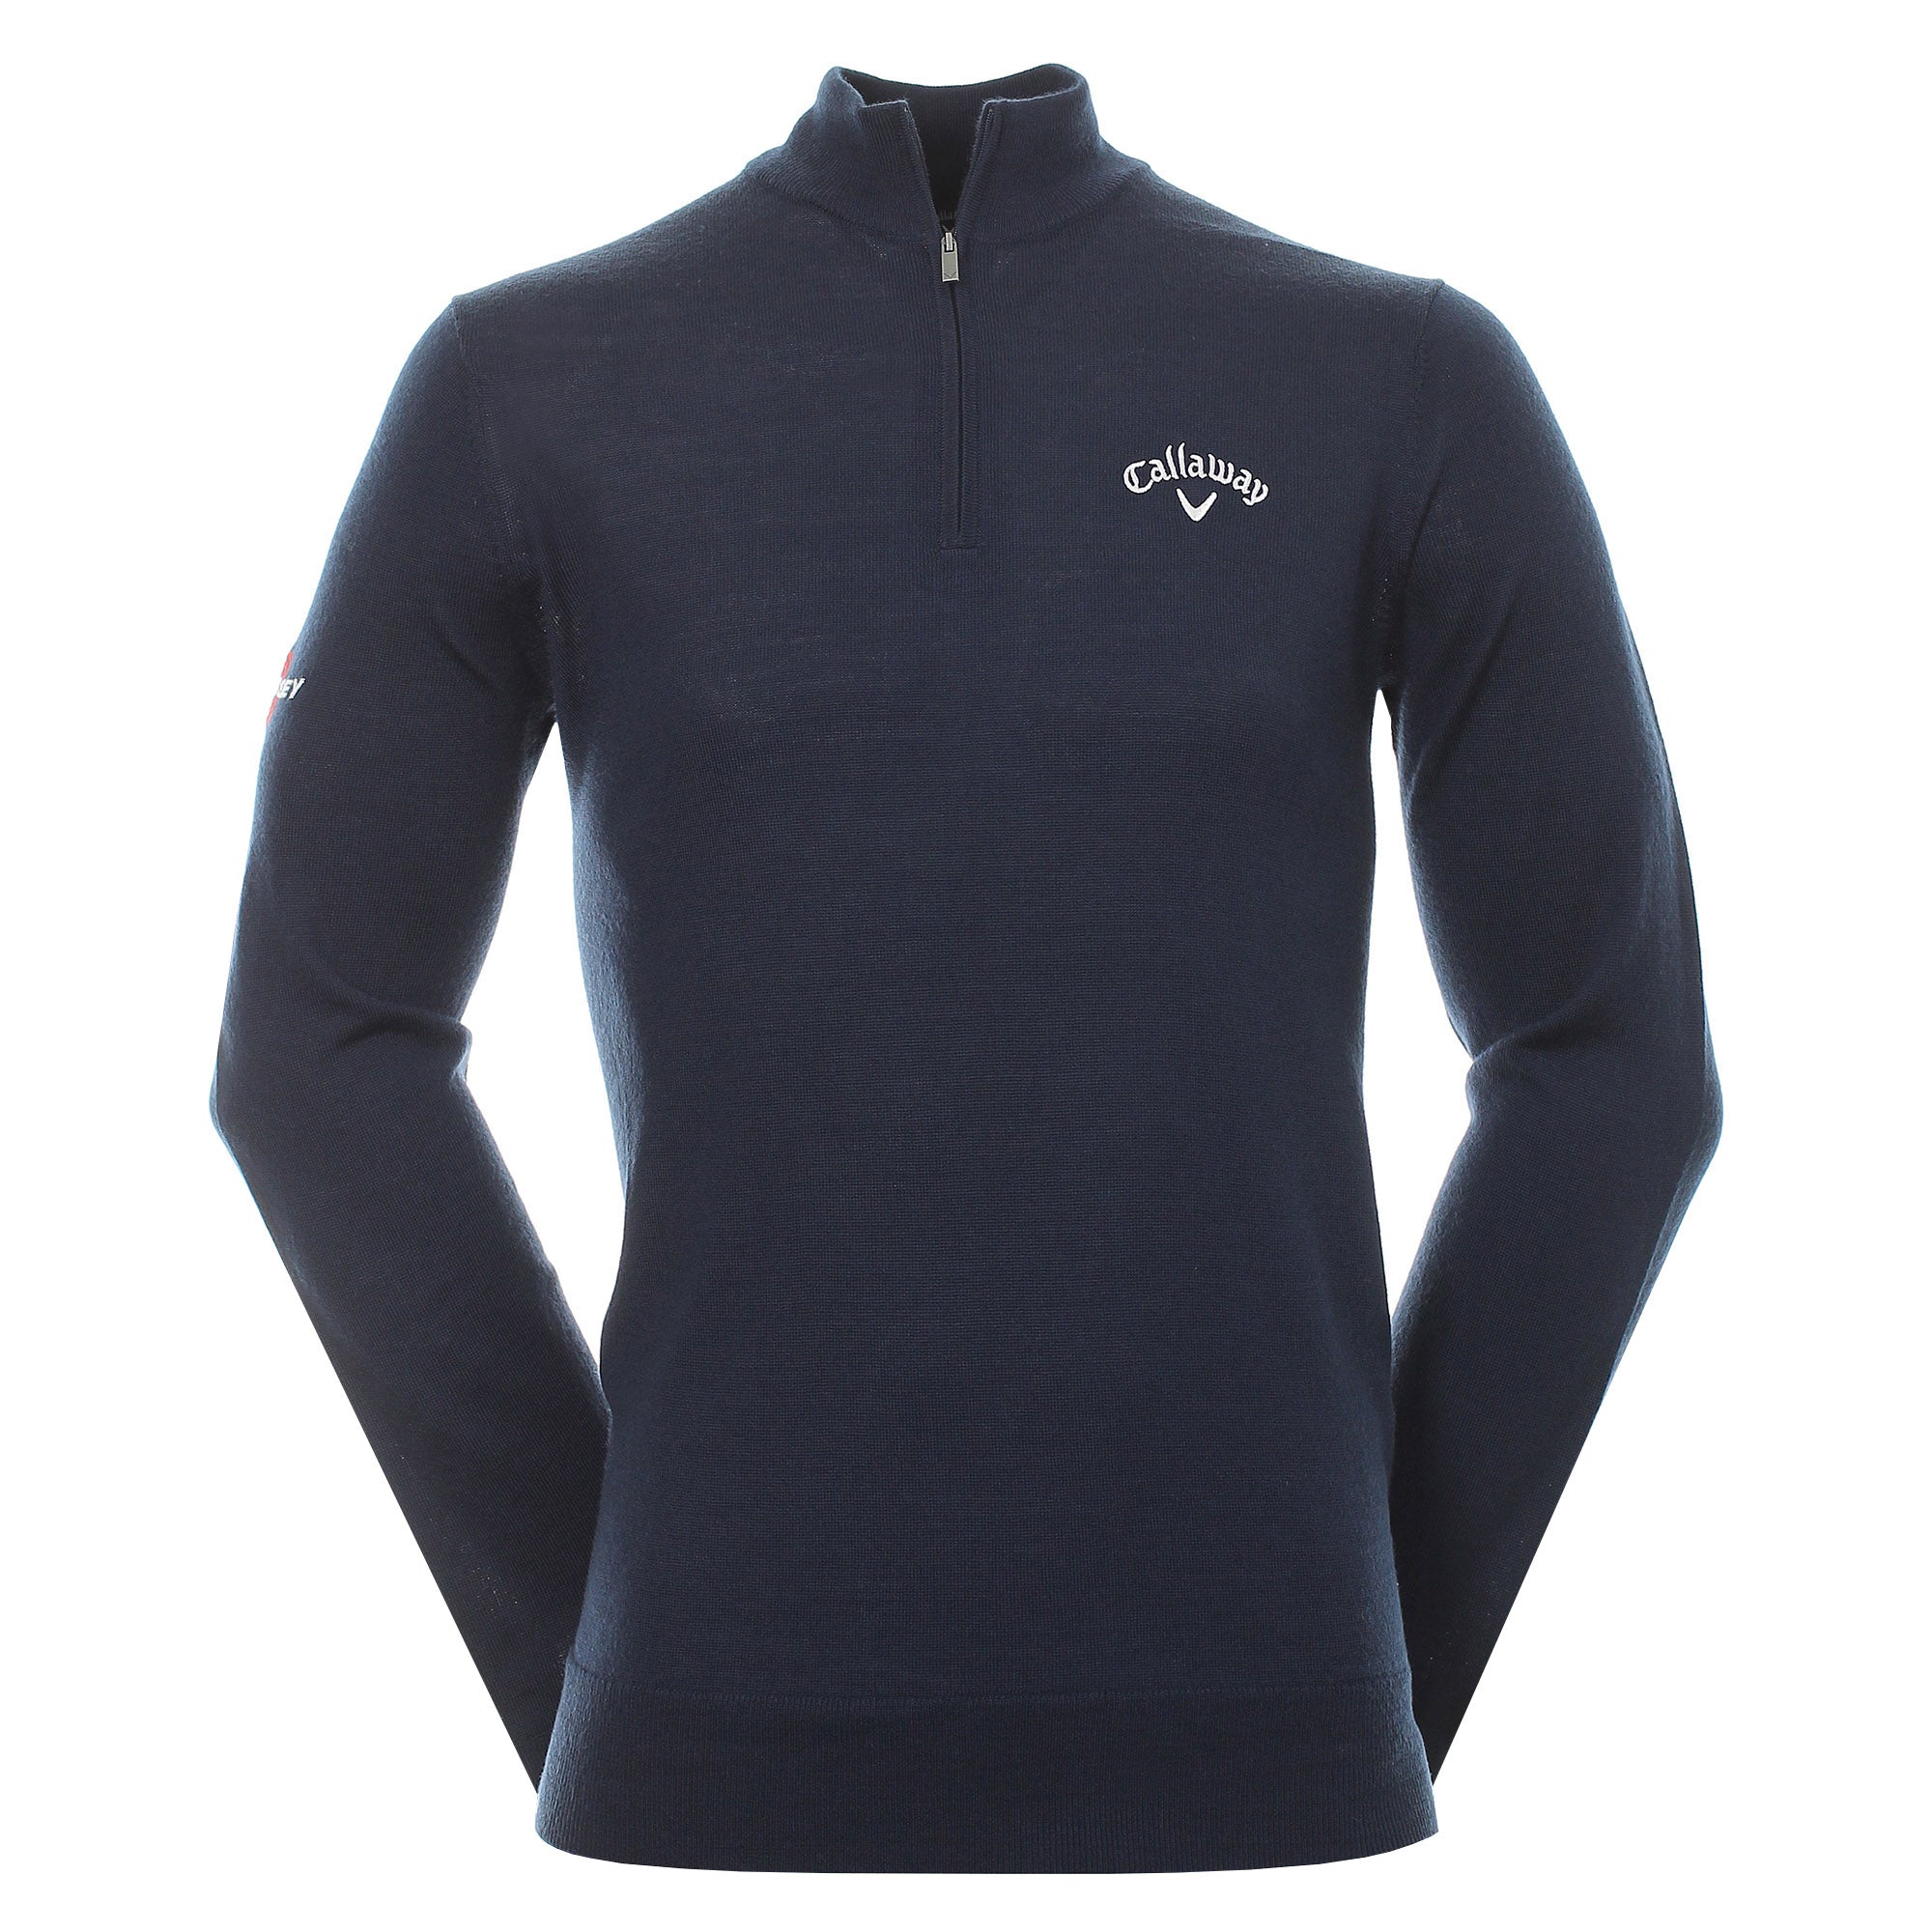 callaway-golf-blended-merino-1-4-zip-sweater-cggf80m1-navy